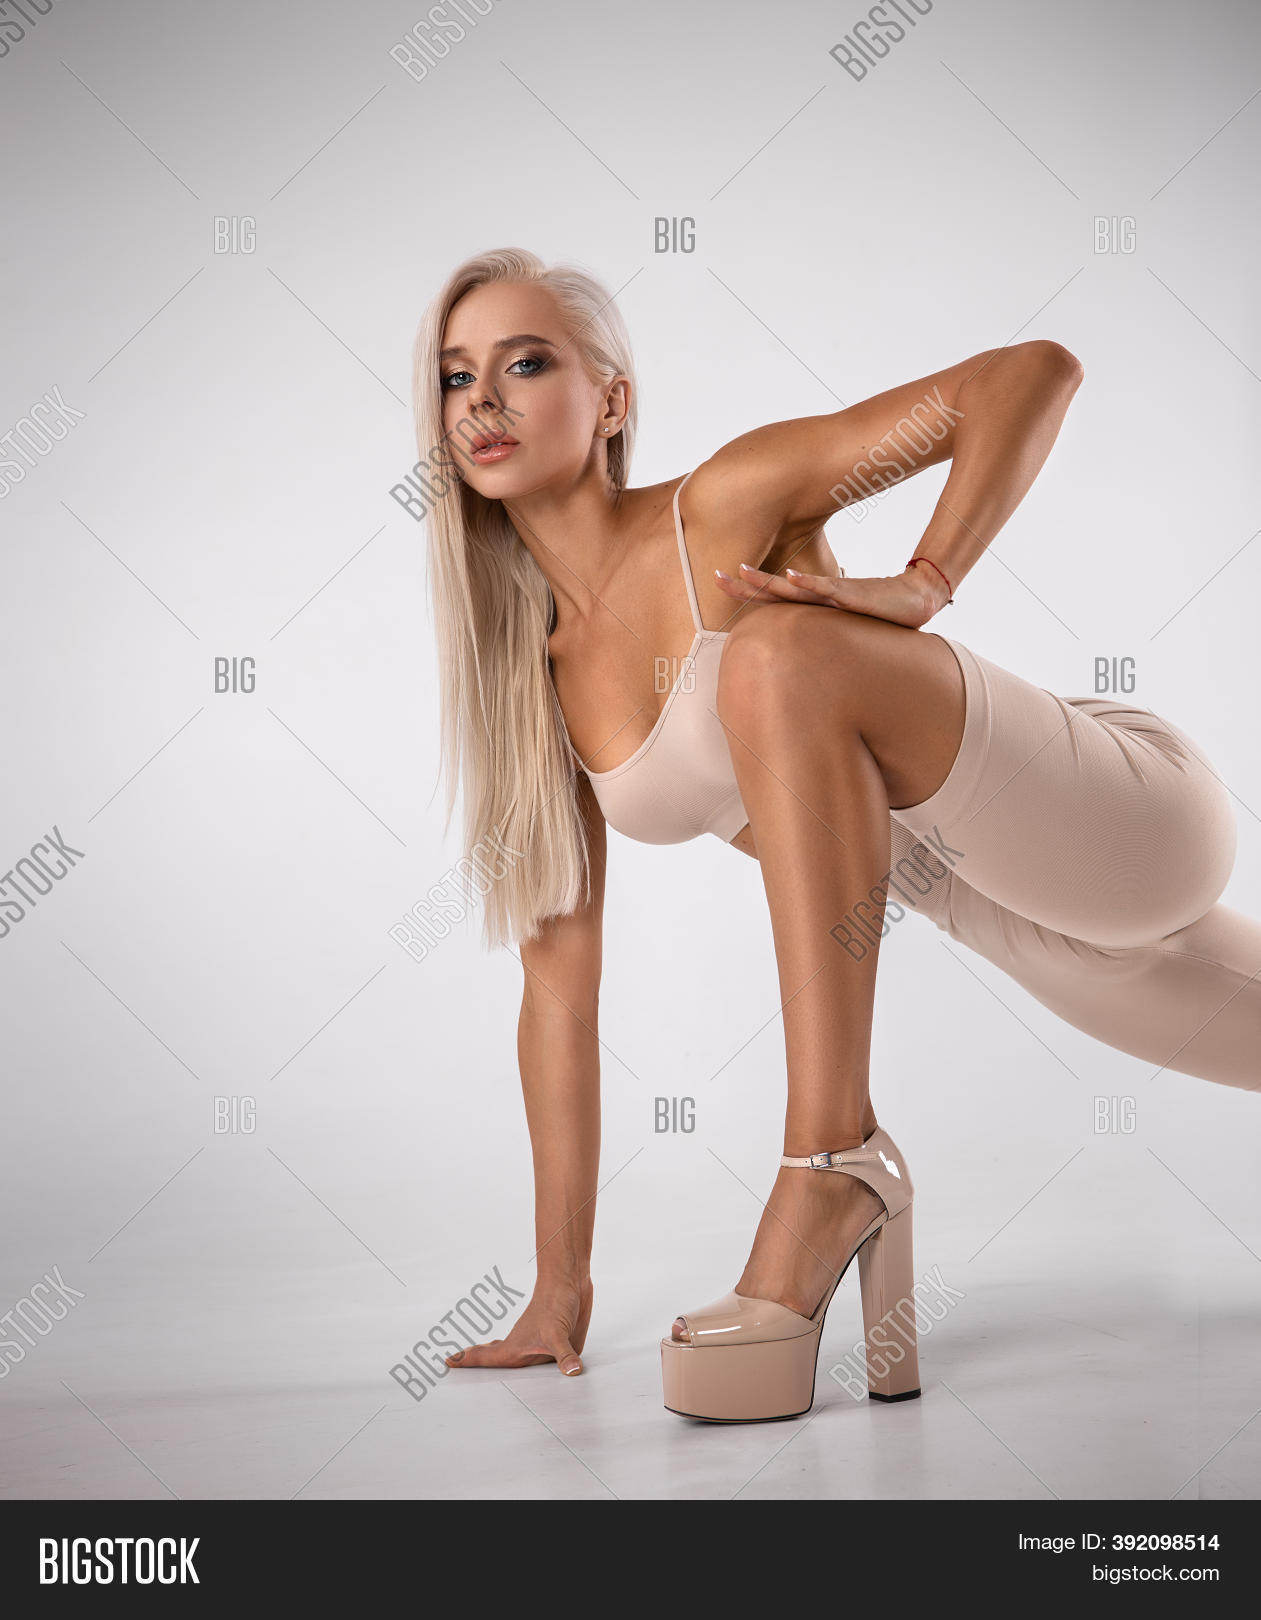 arghya dey add beautiful nude fitness models photo